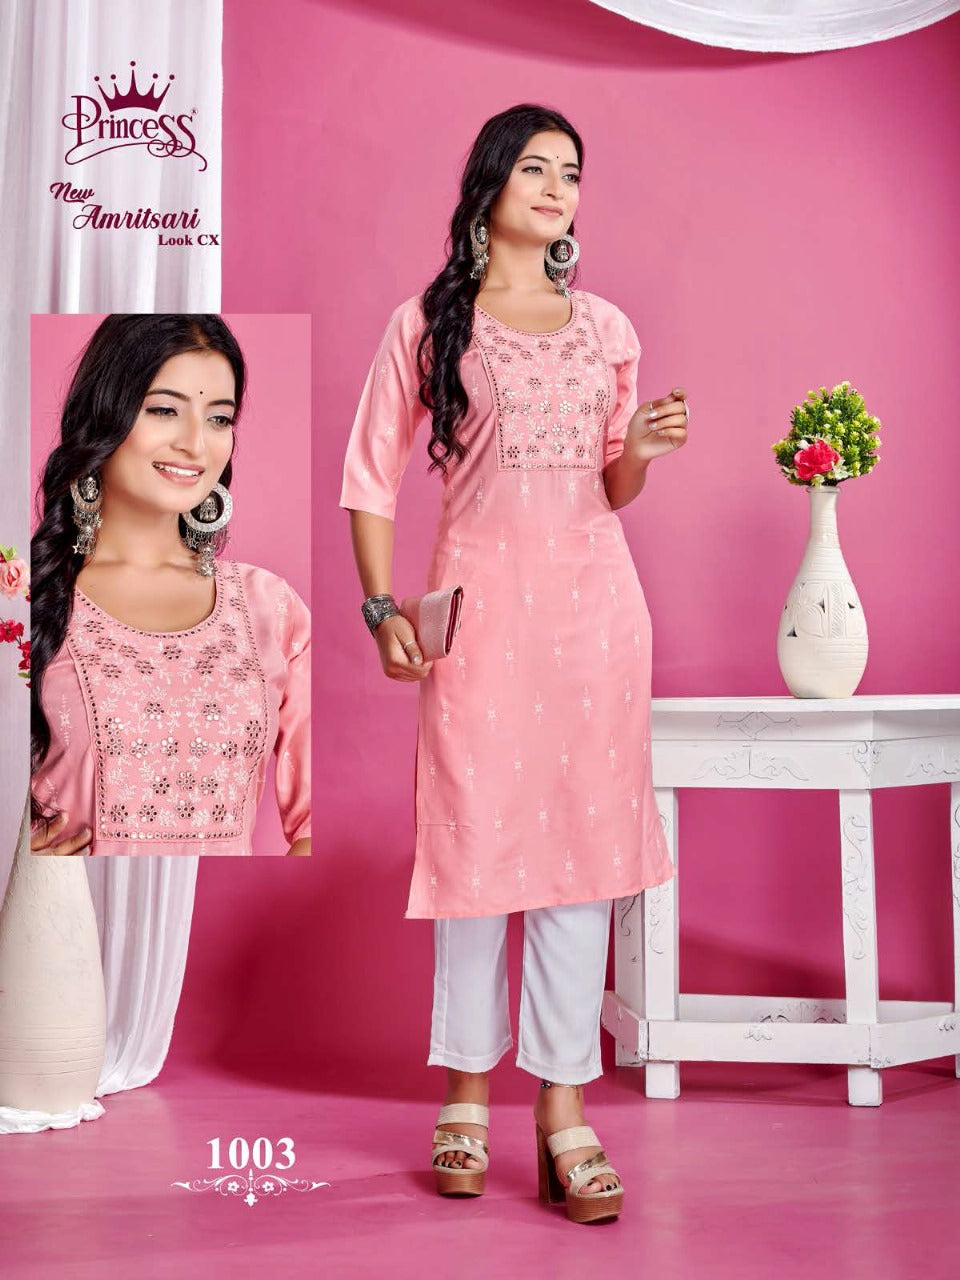 New Amritsari Look Cx Princess Creation Heavy Rayon Knee Length Kurtis